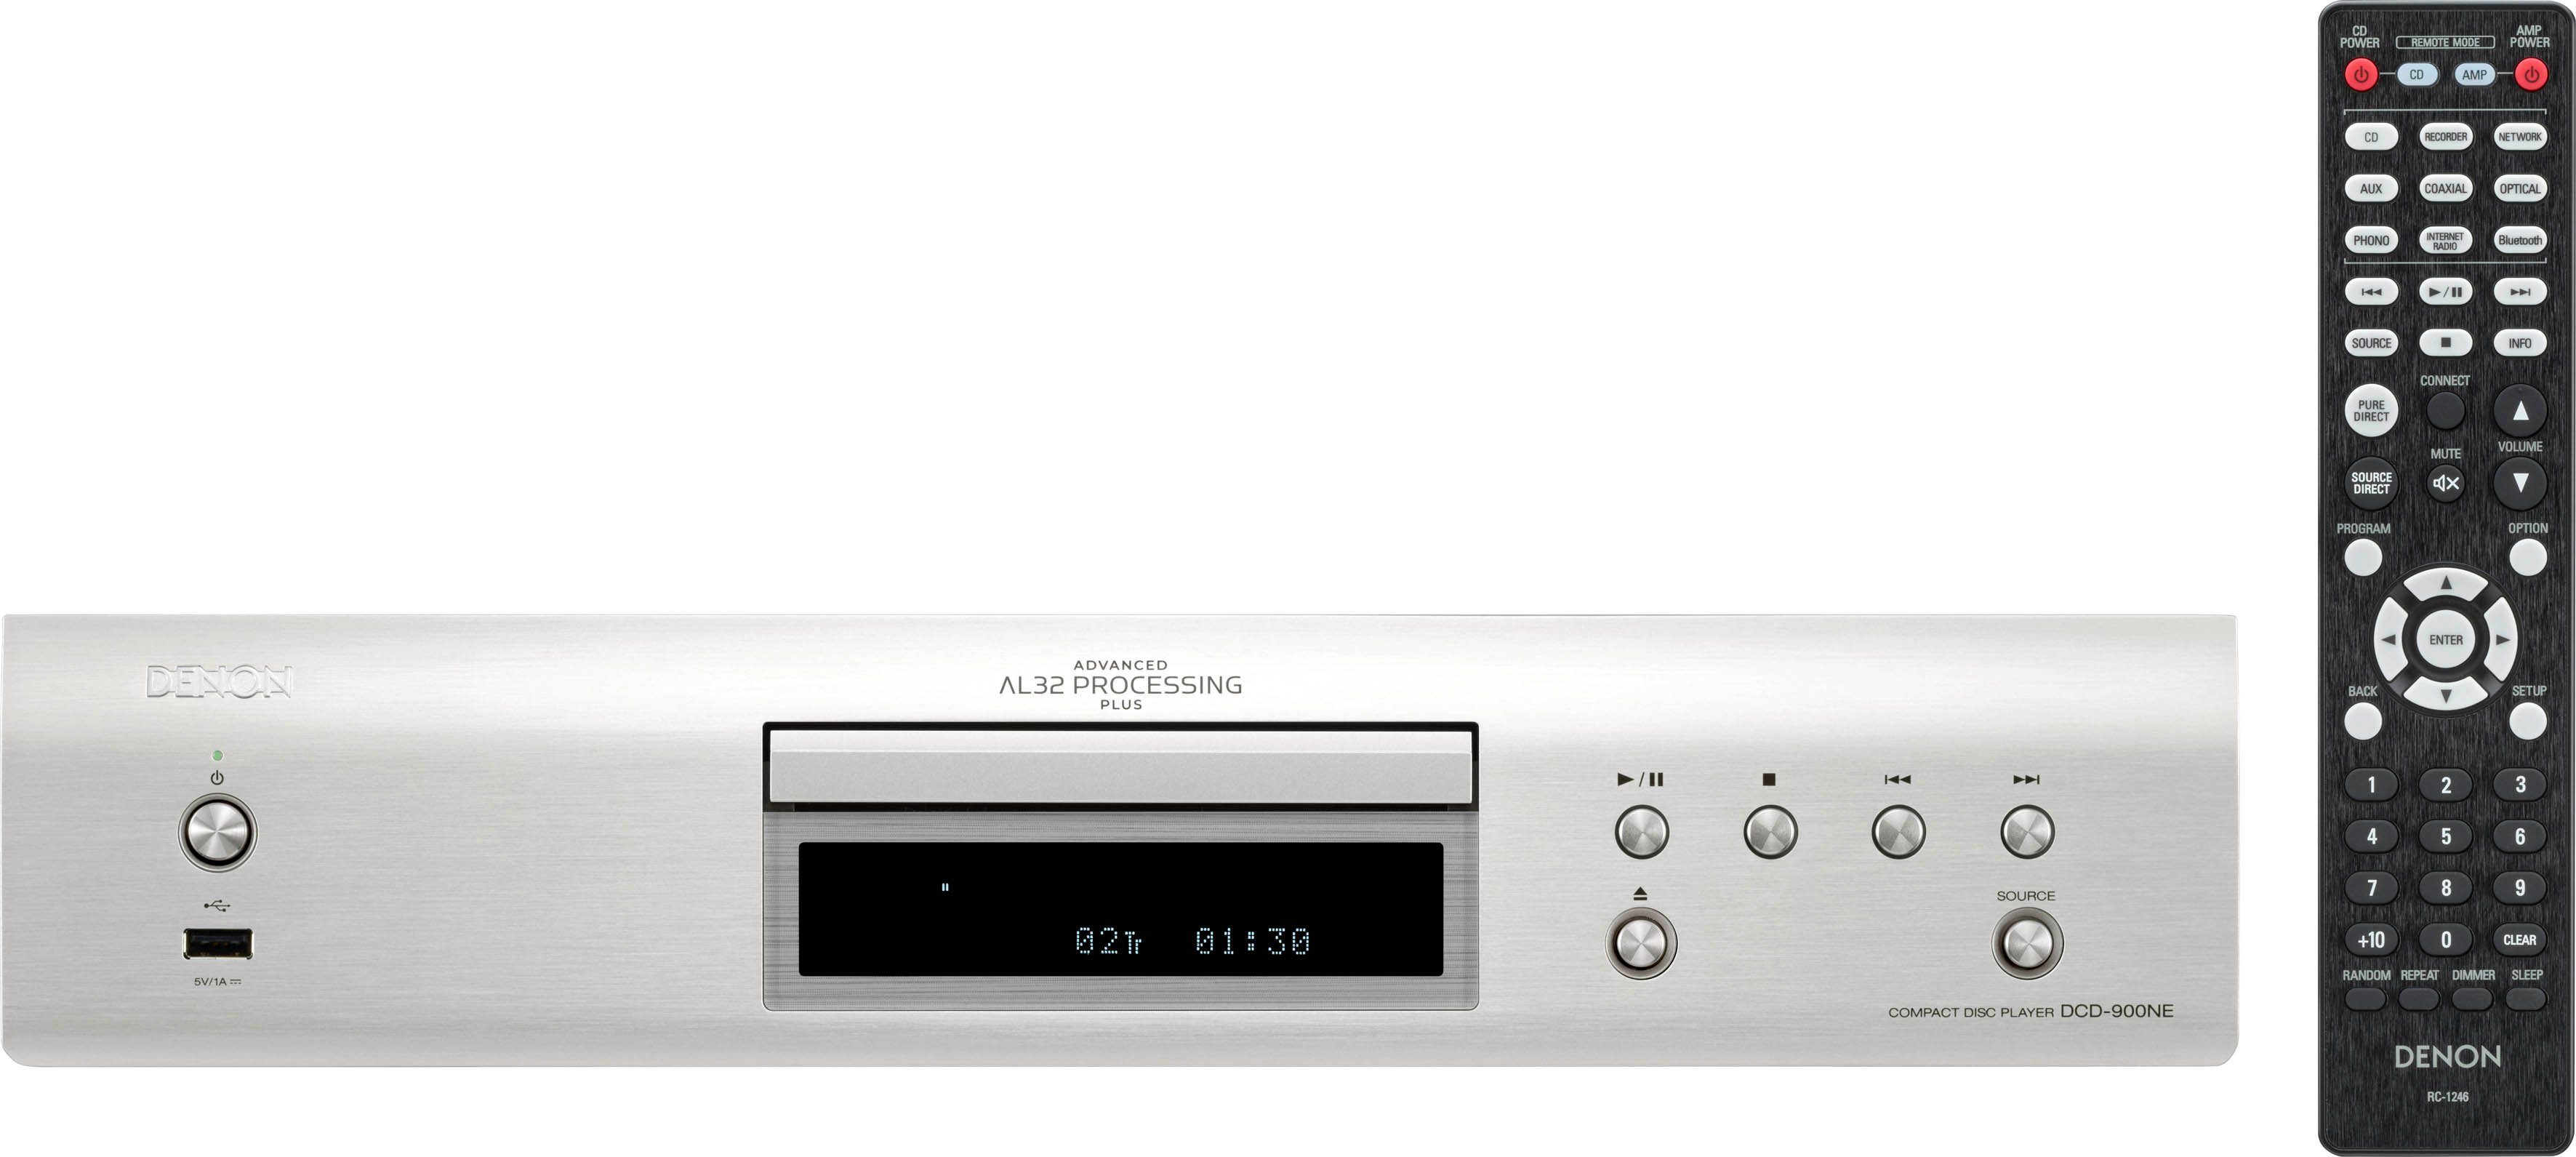 (USB-Audiowiedergabe) silber DCD-900NE CD-Player Denon